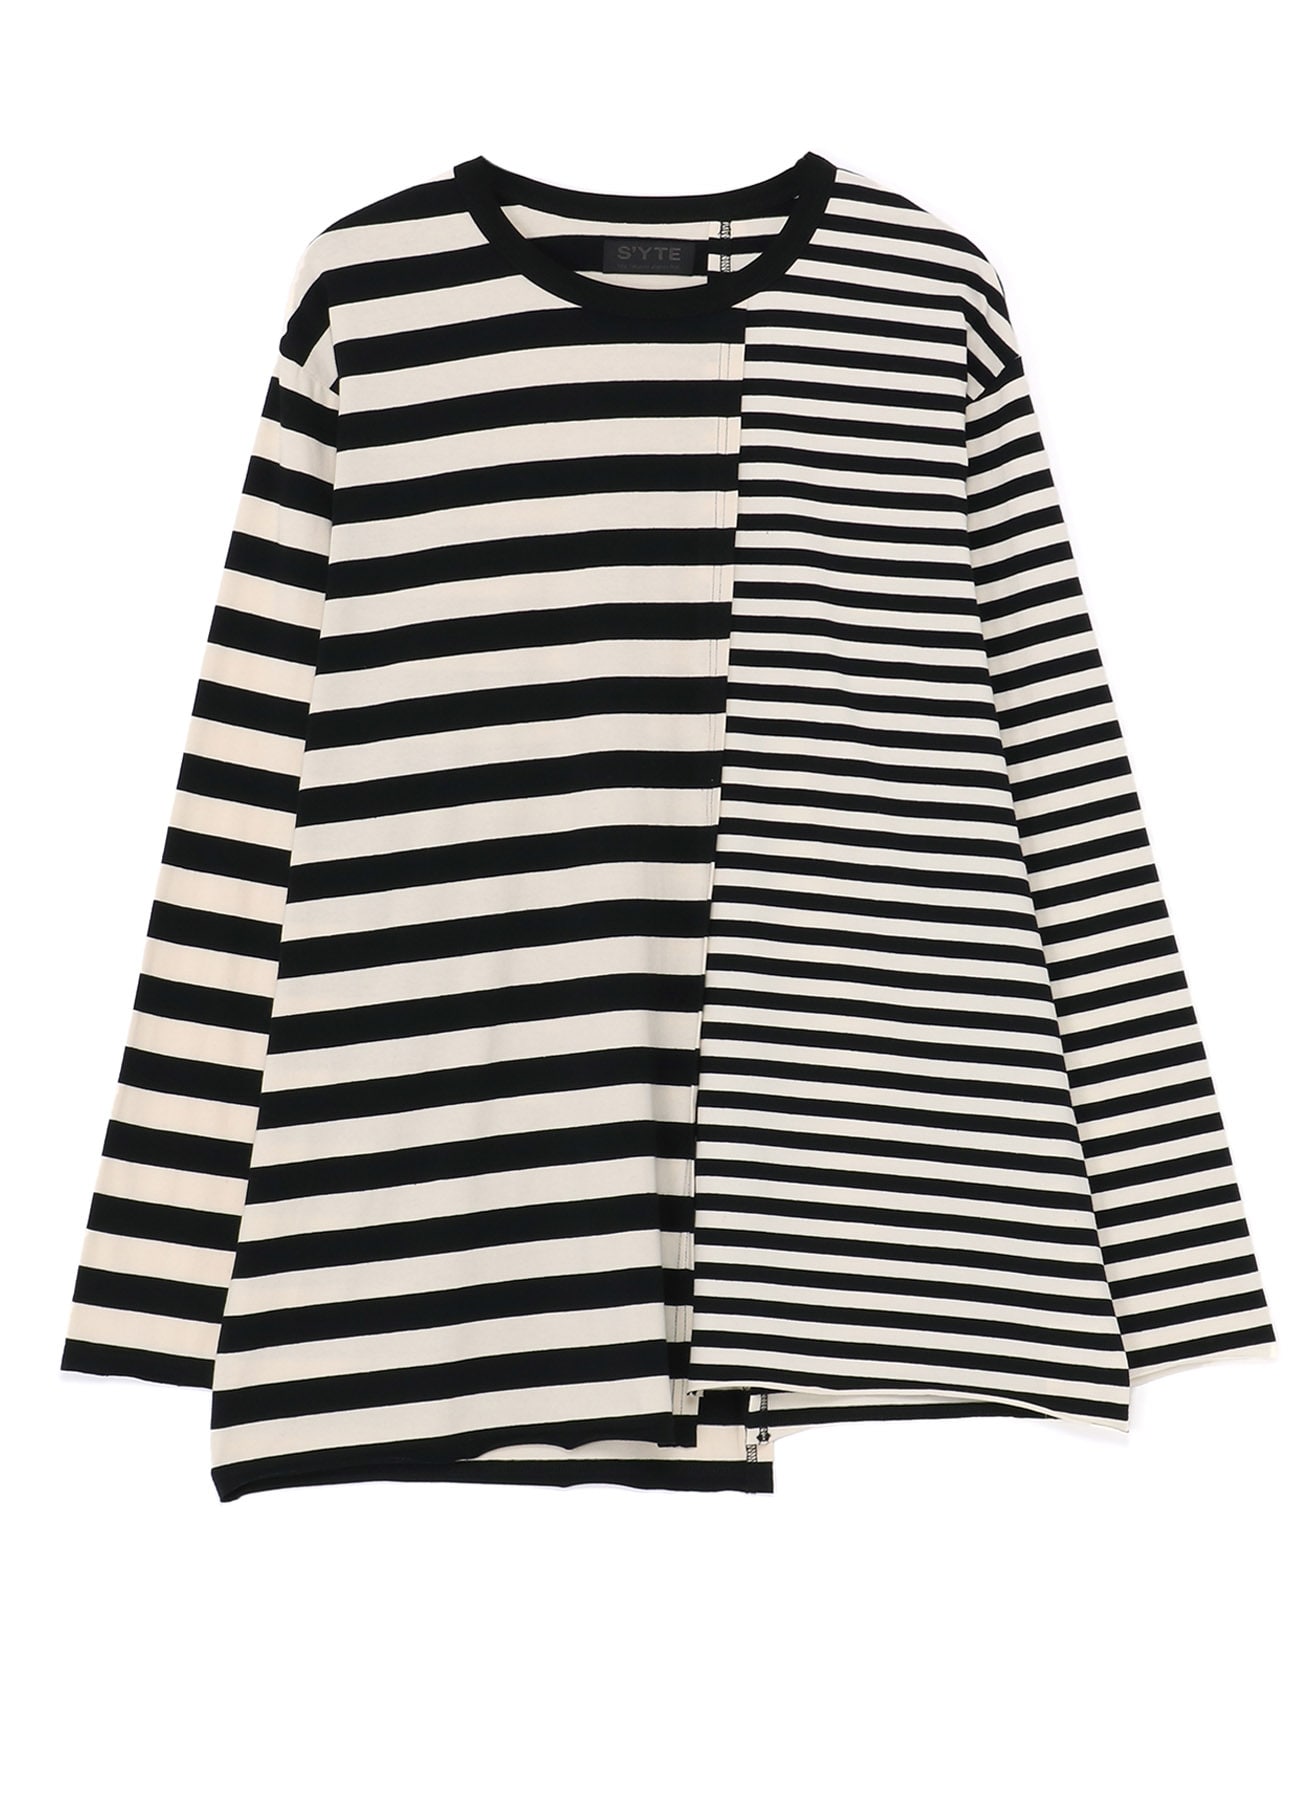 Thin Stripe + Thick Stripe Shifting Long Sleeve T-Shirt